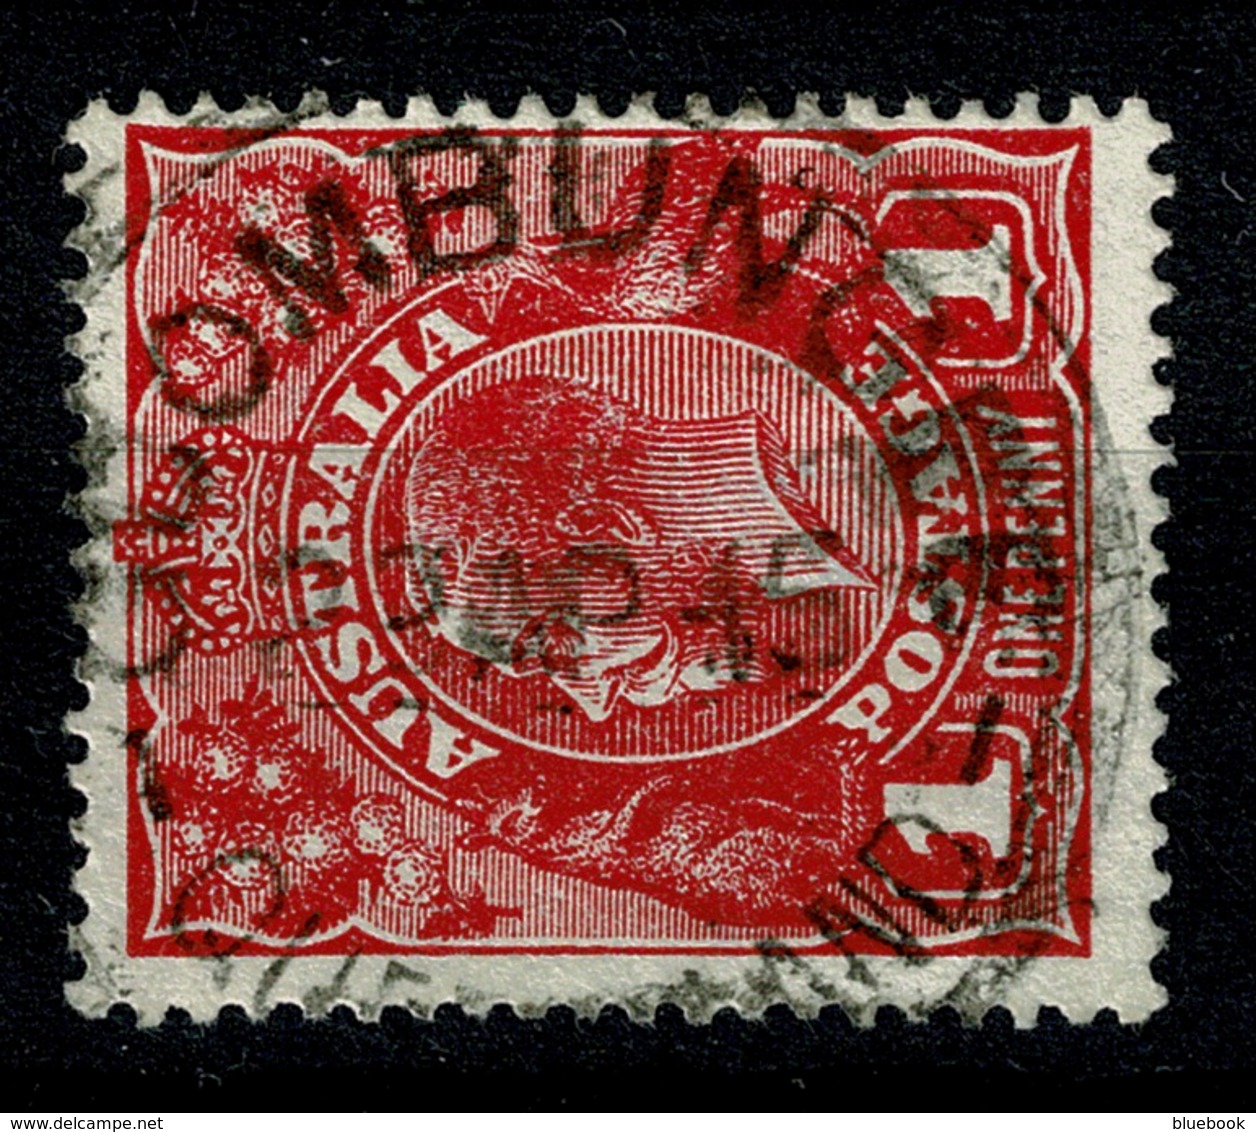 Ref 1258 - 1915 Australia KGV 1d Head Used Stamp - Coombungee Queensland Postmark - Gebraucht